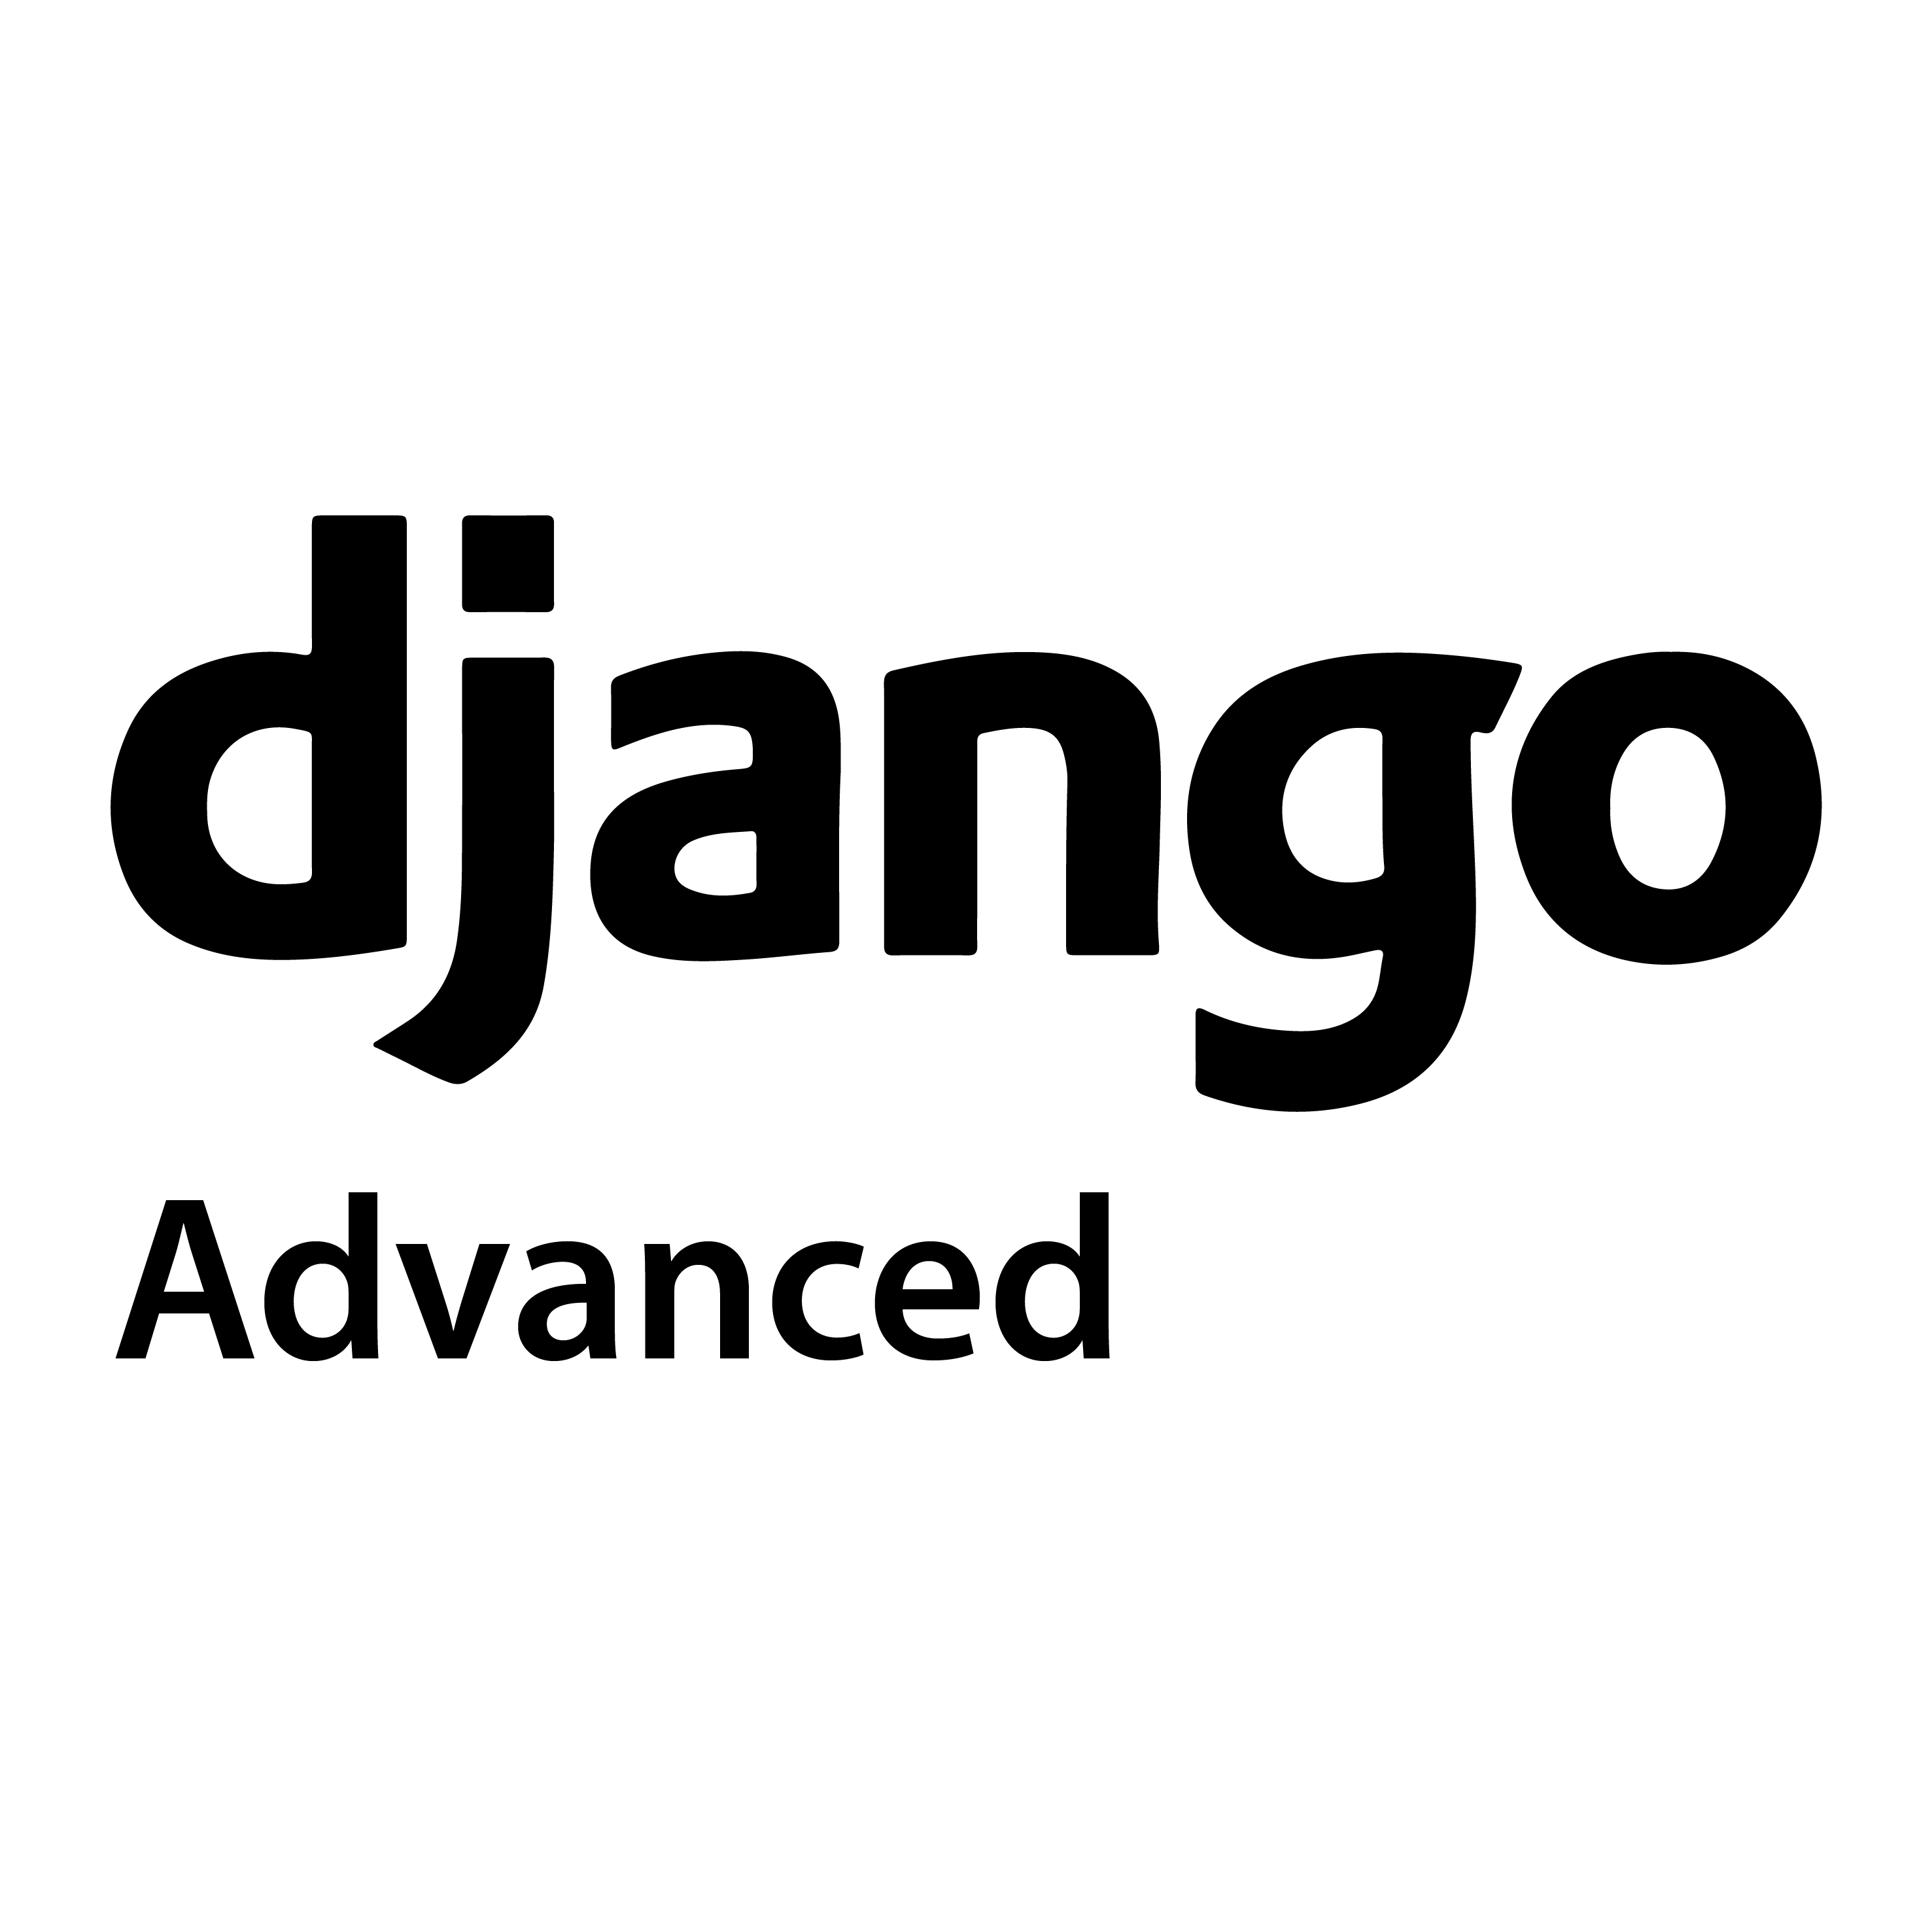 Advanced Django